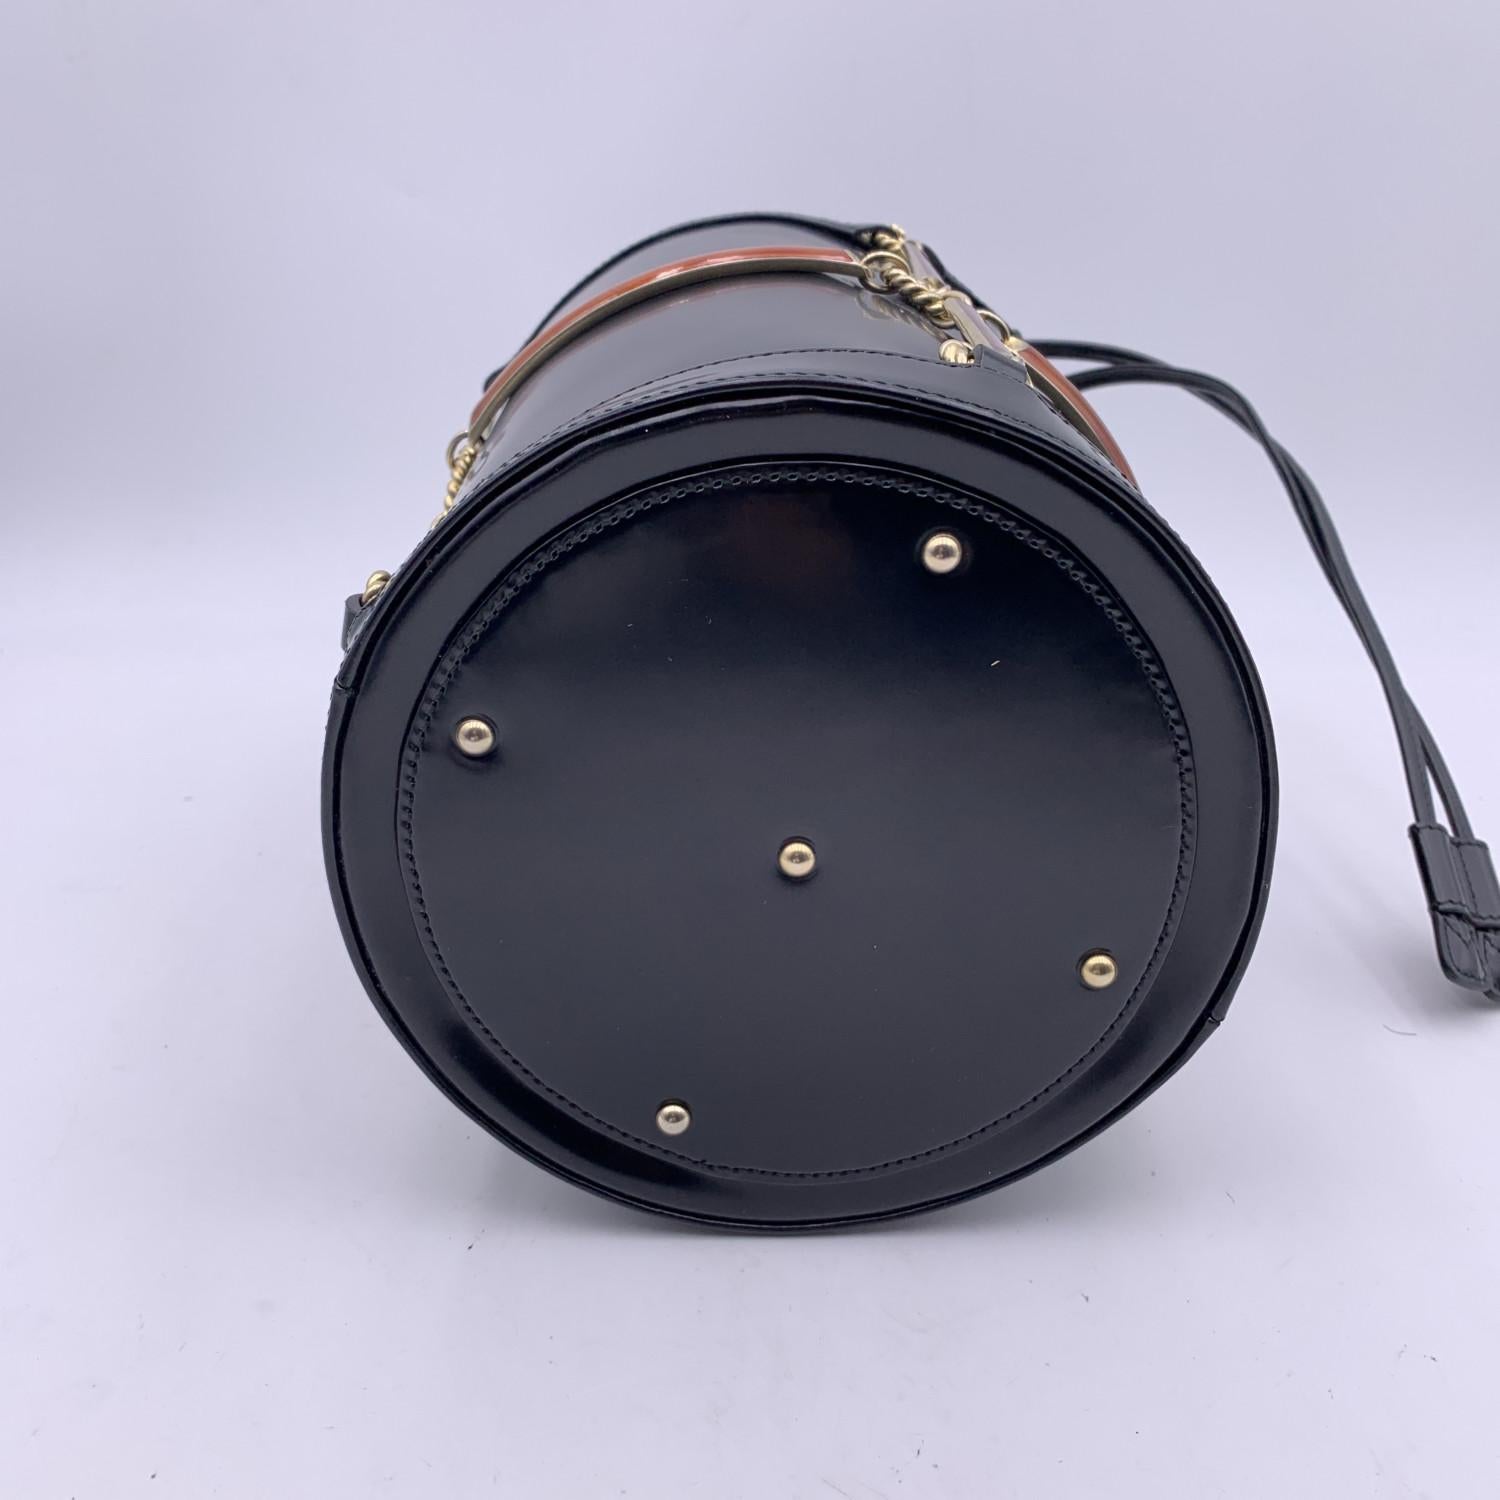 Gucci Black Leather Enamel Cage Round Bucket Bag Tote Handbag For Sale 3